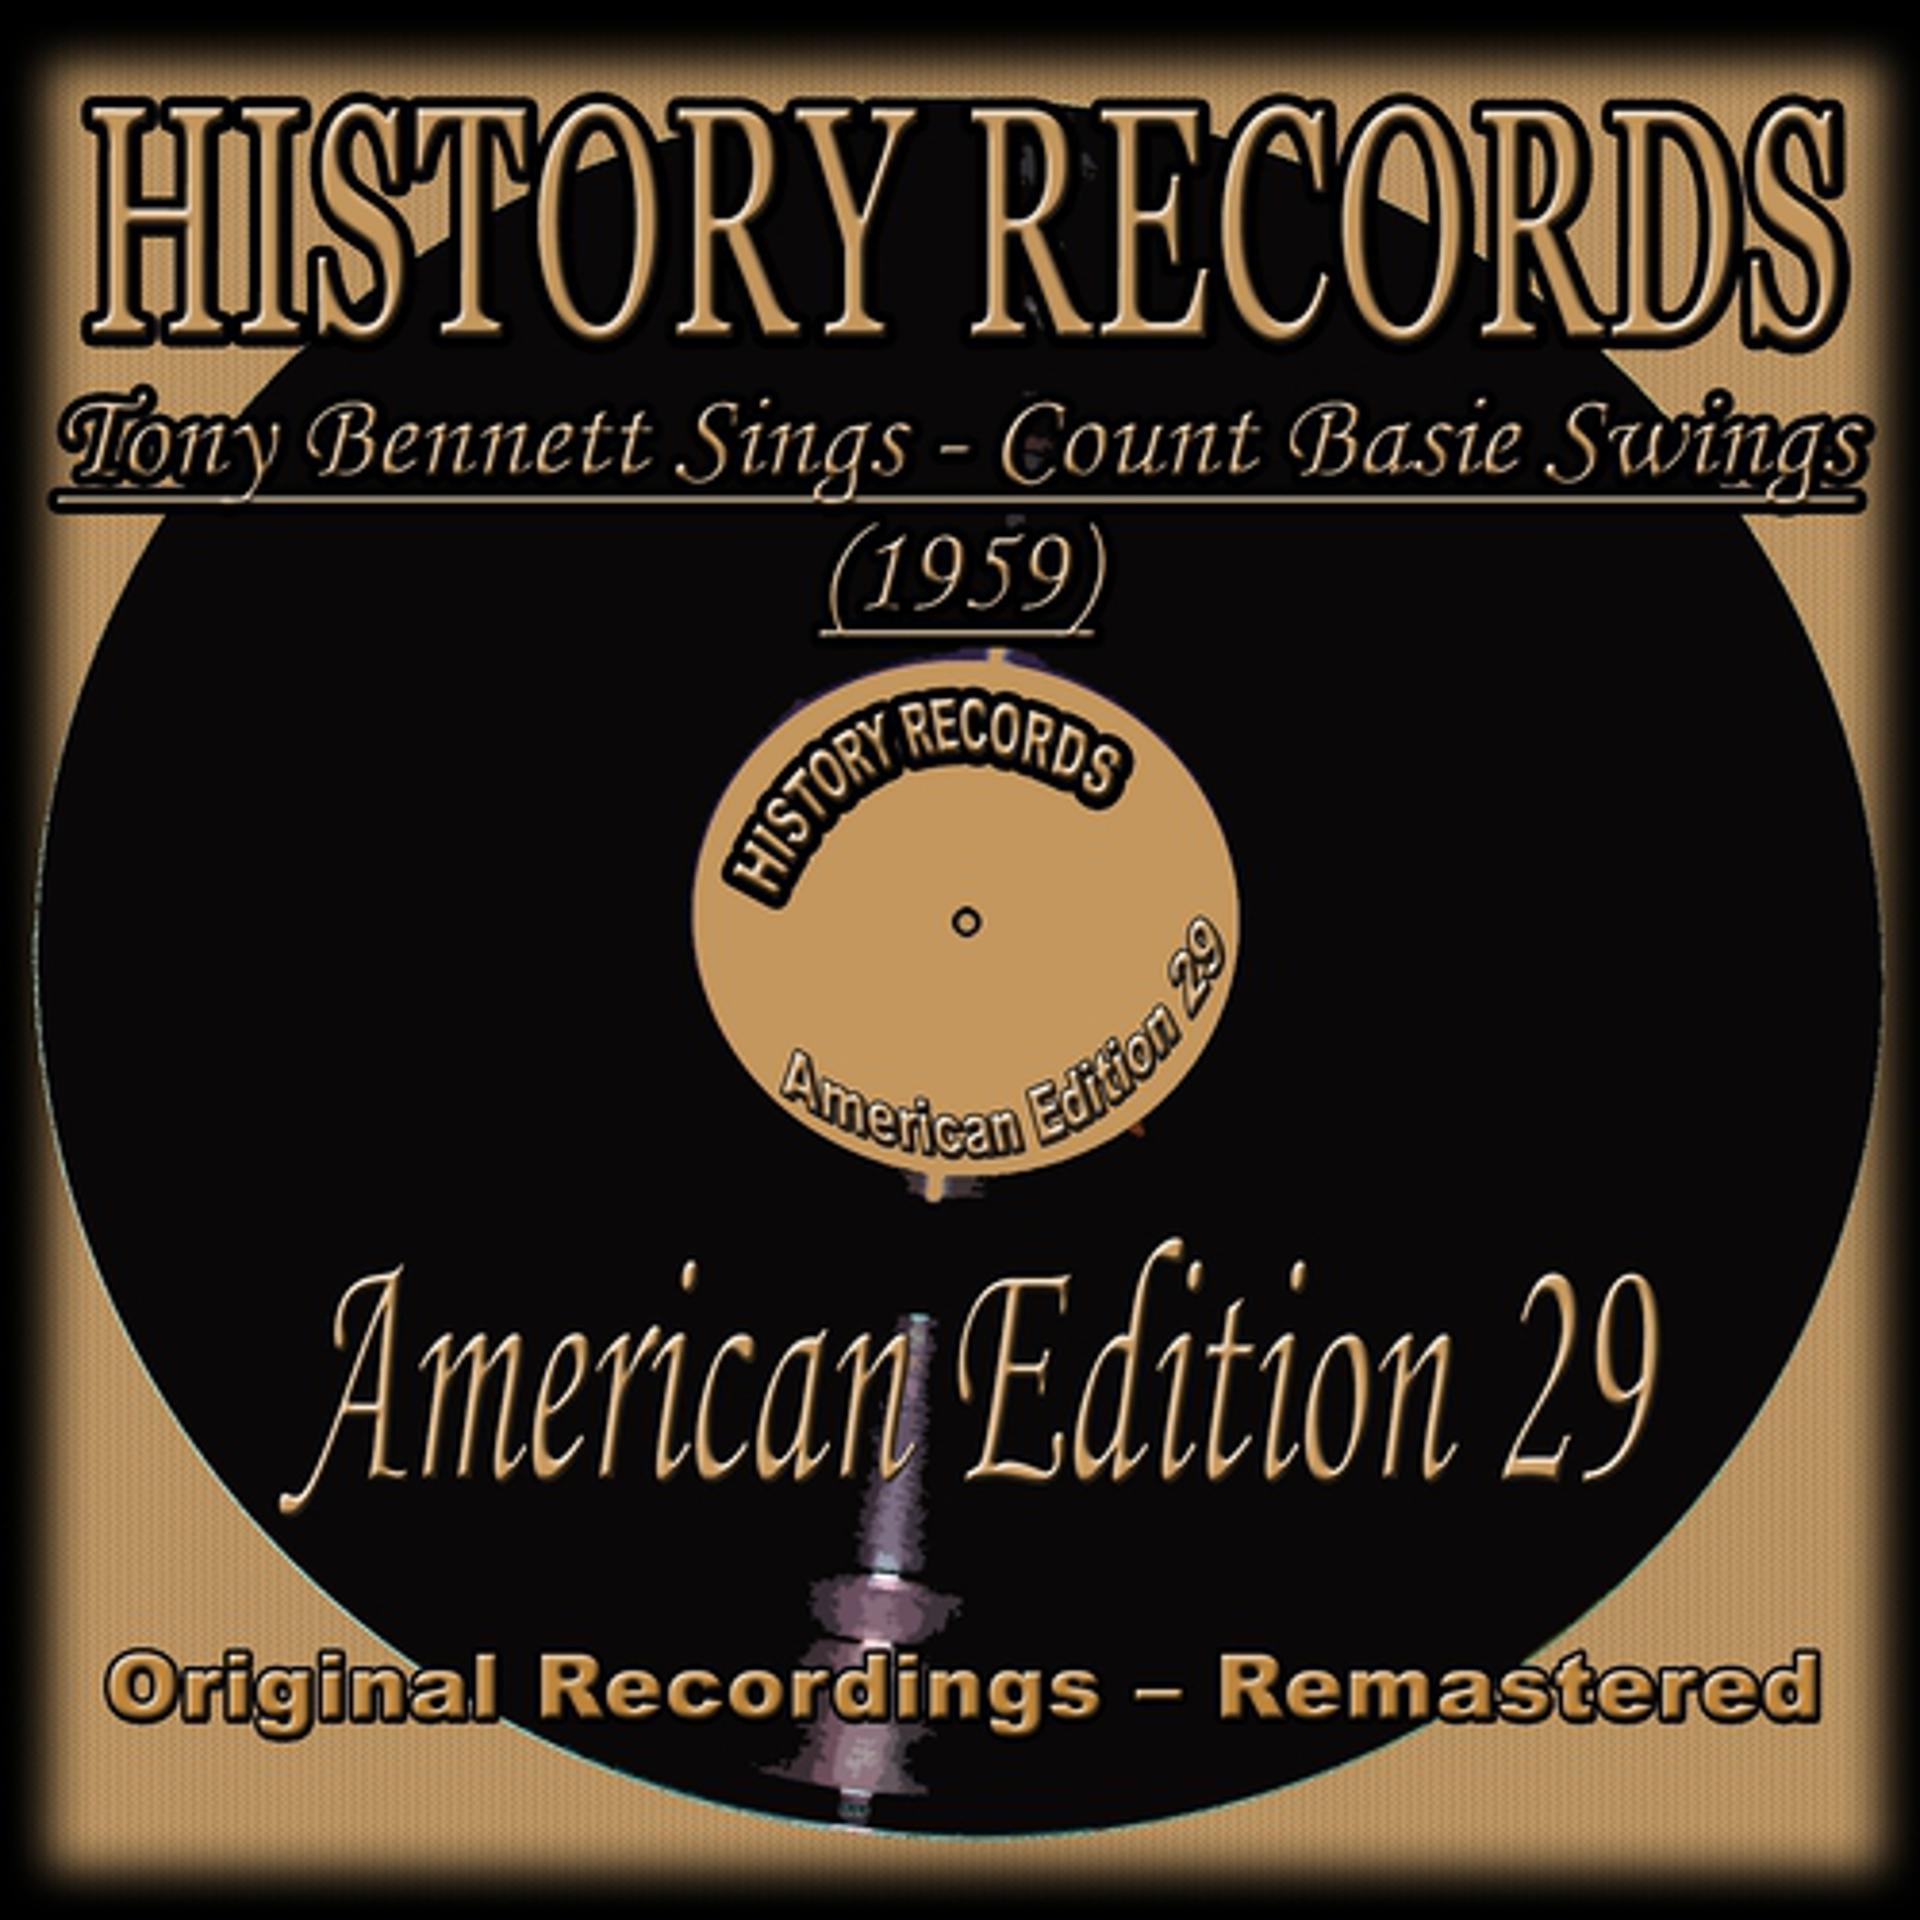 Постер альбома Tony Bennett Sings Count Basie Swings (1959) (History Records - American Edition 29 - Original Recordings - Remastered)